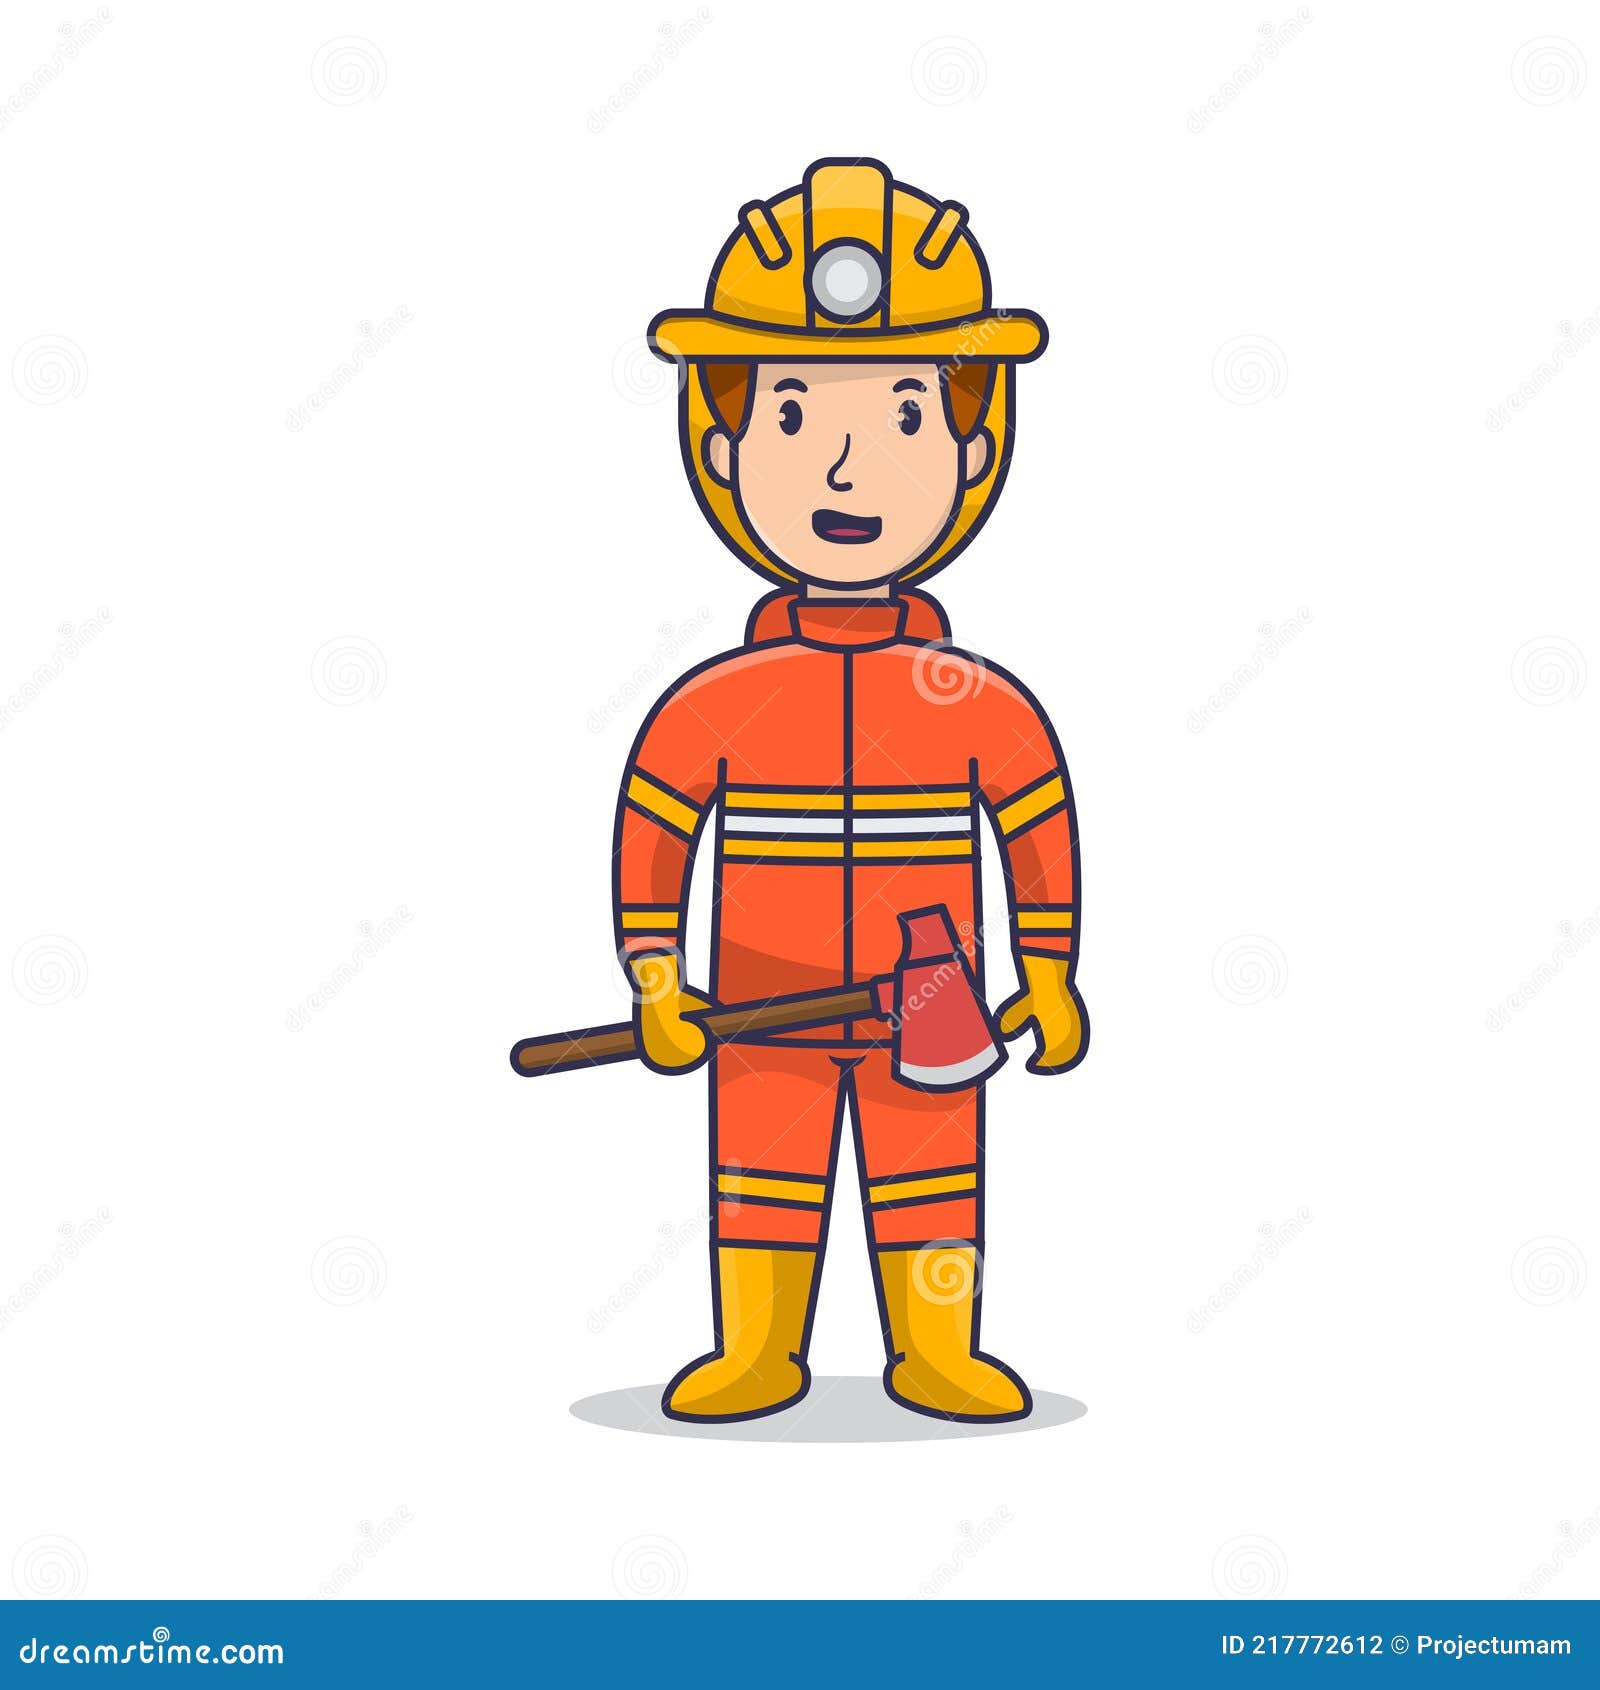 FireFighter Cartoon Character Man, Cute Firefighter, Fireman / Fire Fighter  Boy Stock Vector - Illustration of emergency, service: 217772612